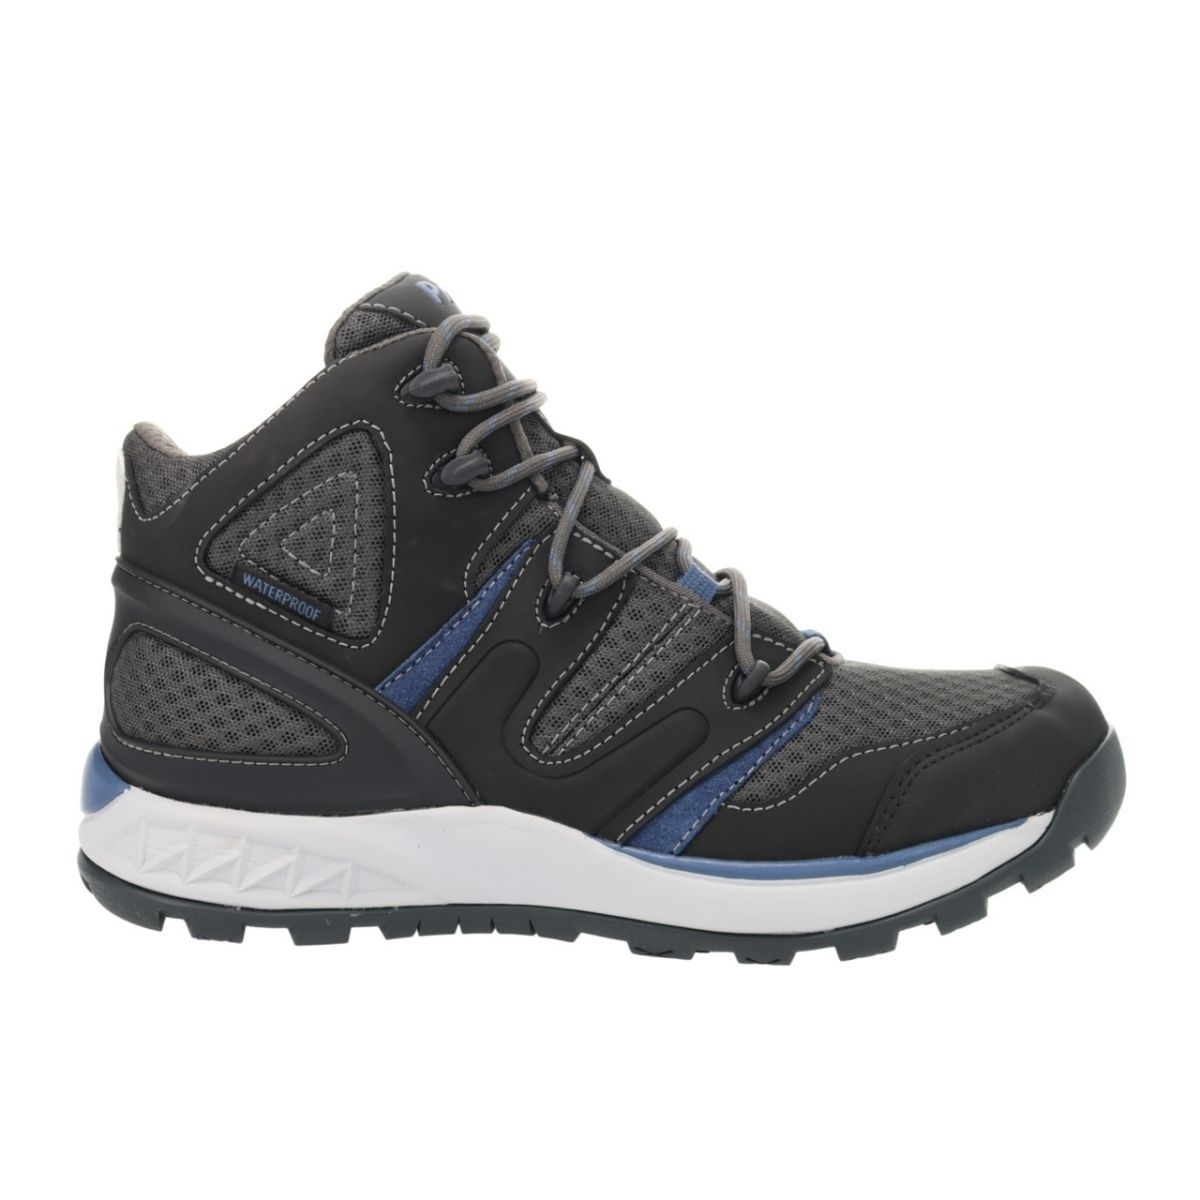 Propet Men's Veymont Waterproof Hiking Boot Grey/Blue - MOA022SGRB GREY/BLUE - GREY/BLUE, 10.5